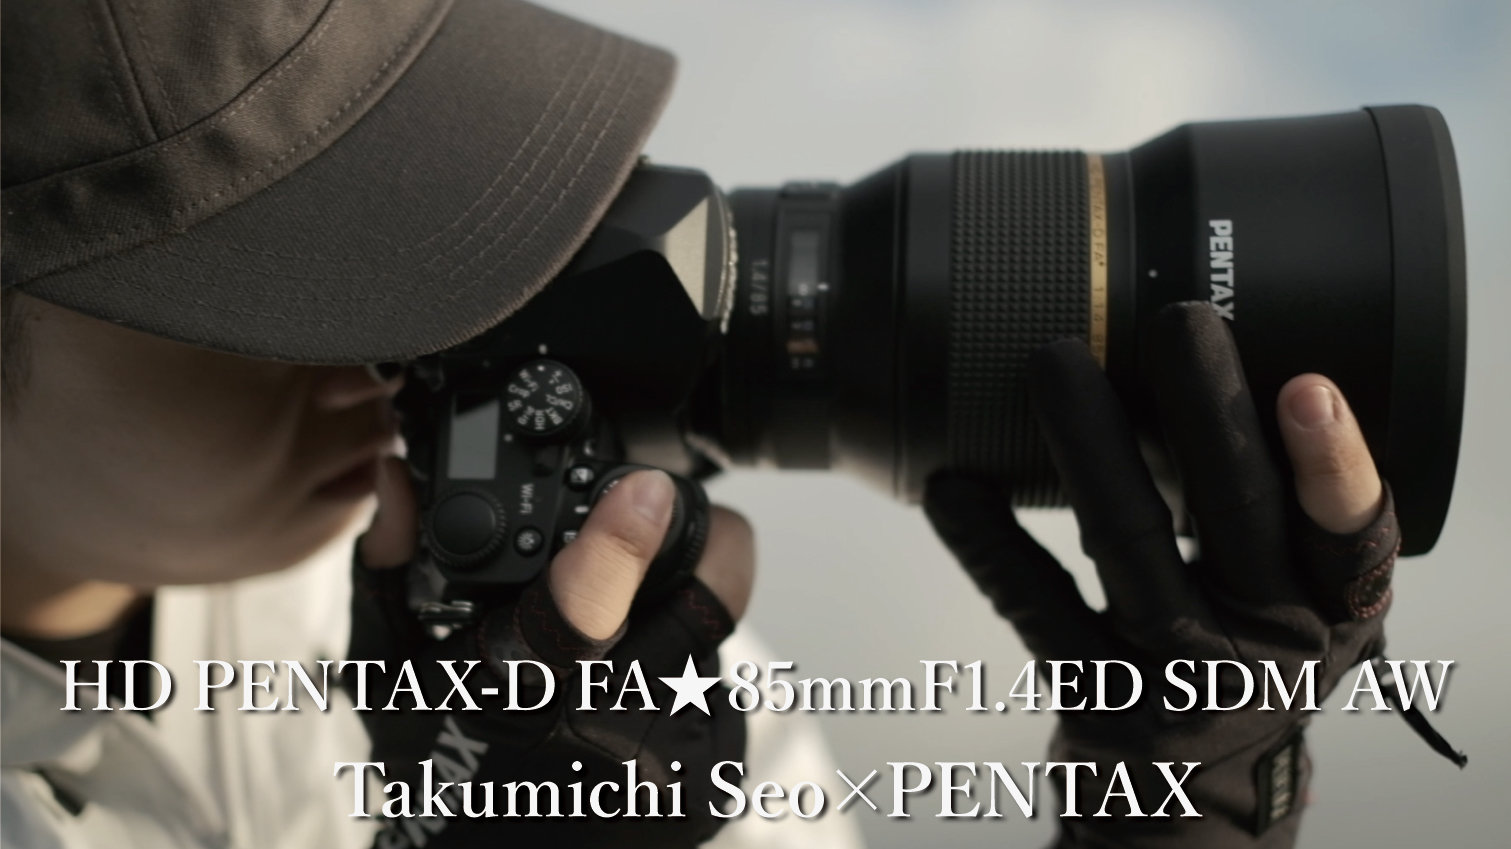 HD PENTAX D FA★85mmF14ED SDM AW プロモーション動画公開